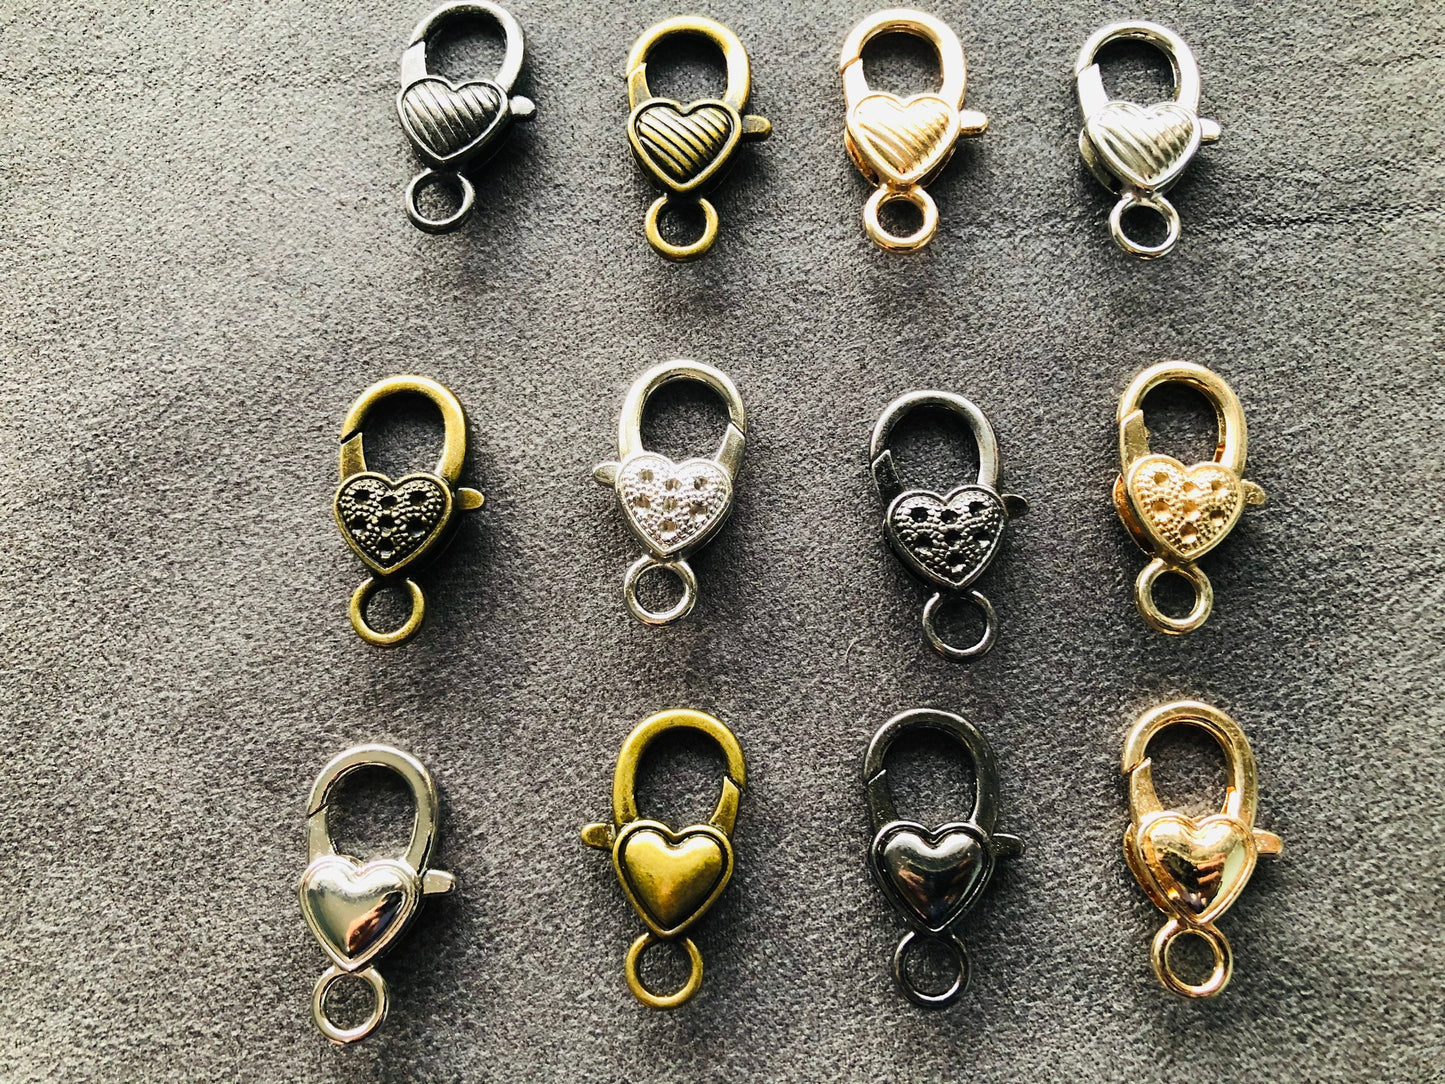 Vintage love heart metal hooks for wristlets, tassels, bag charms, key charms, crafts, bag hardware, bag making,retro style metal hooks